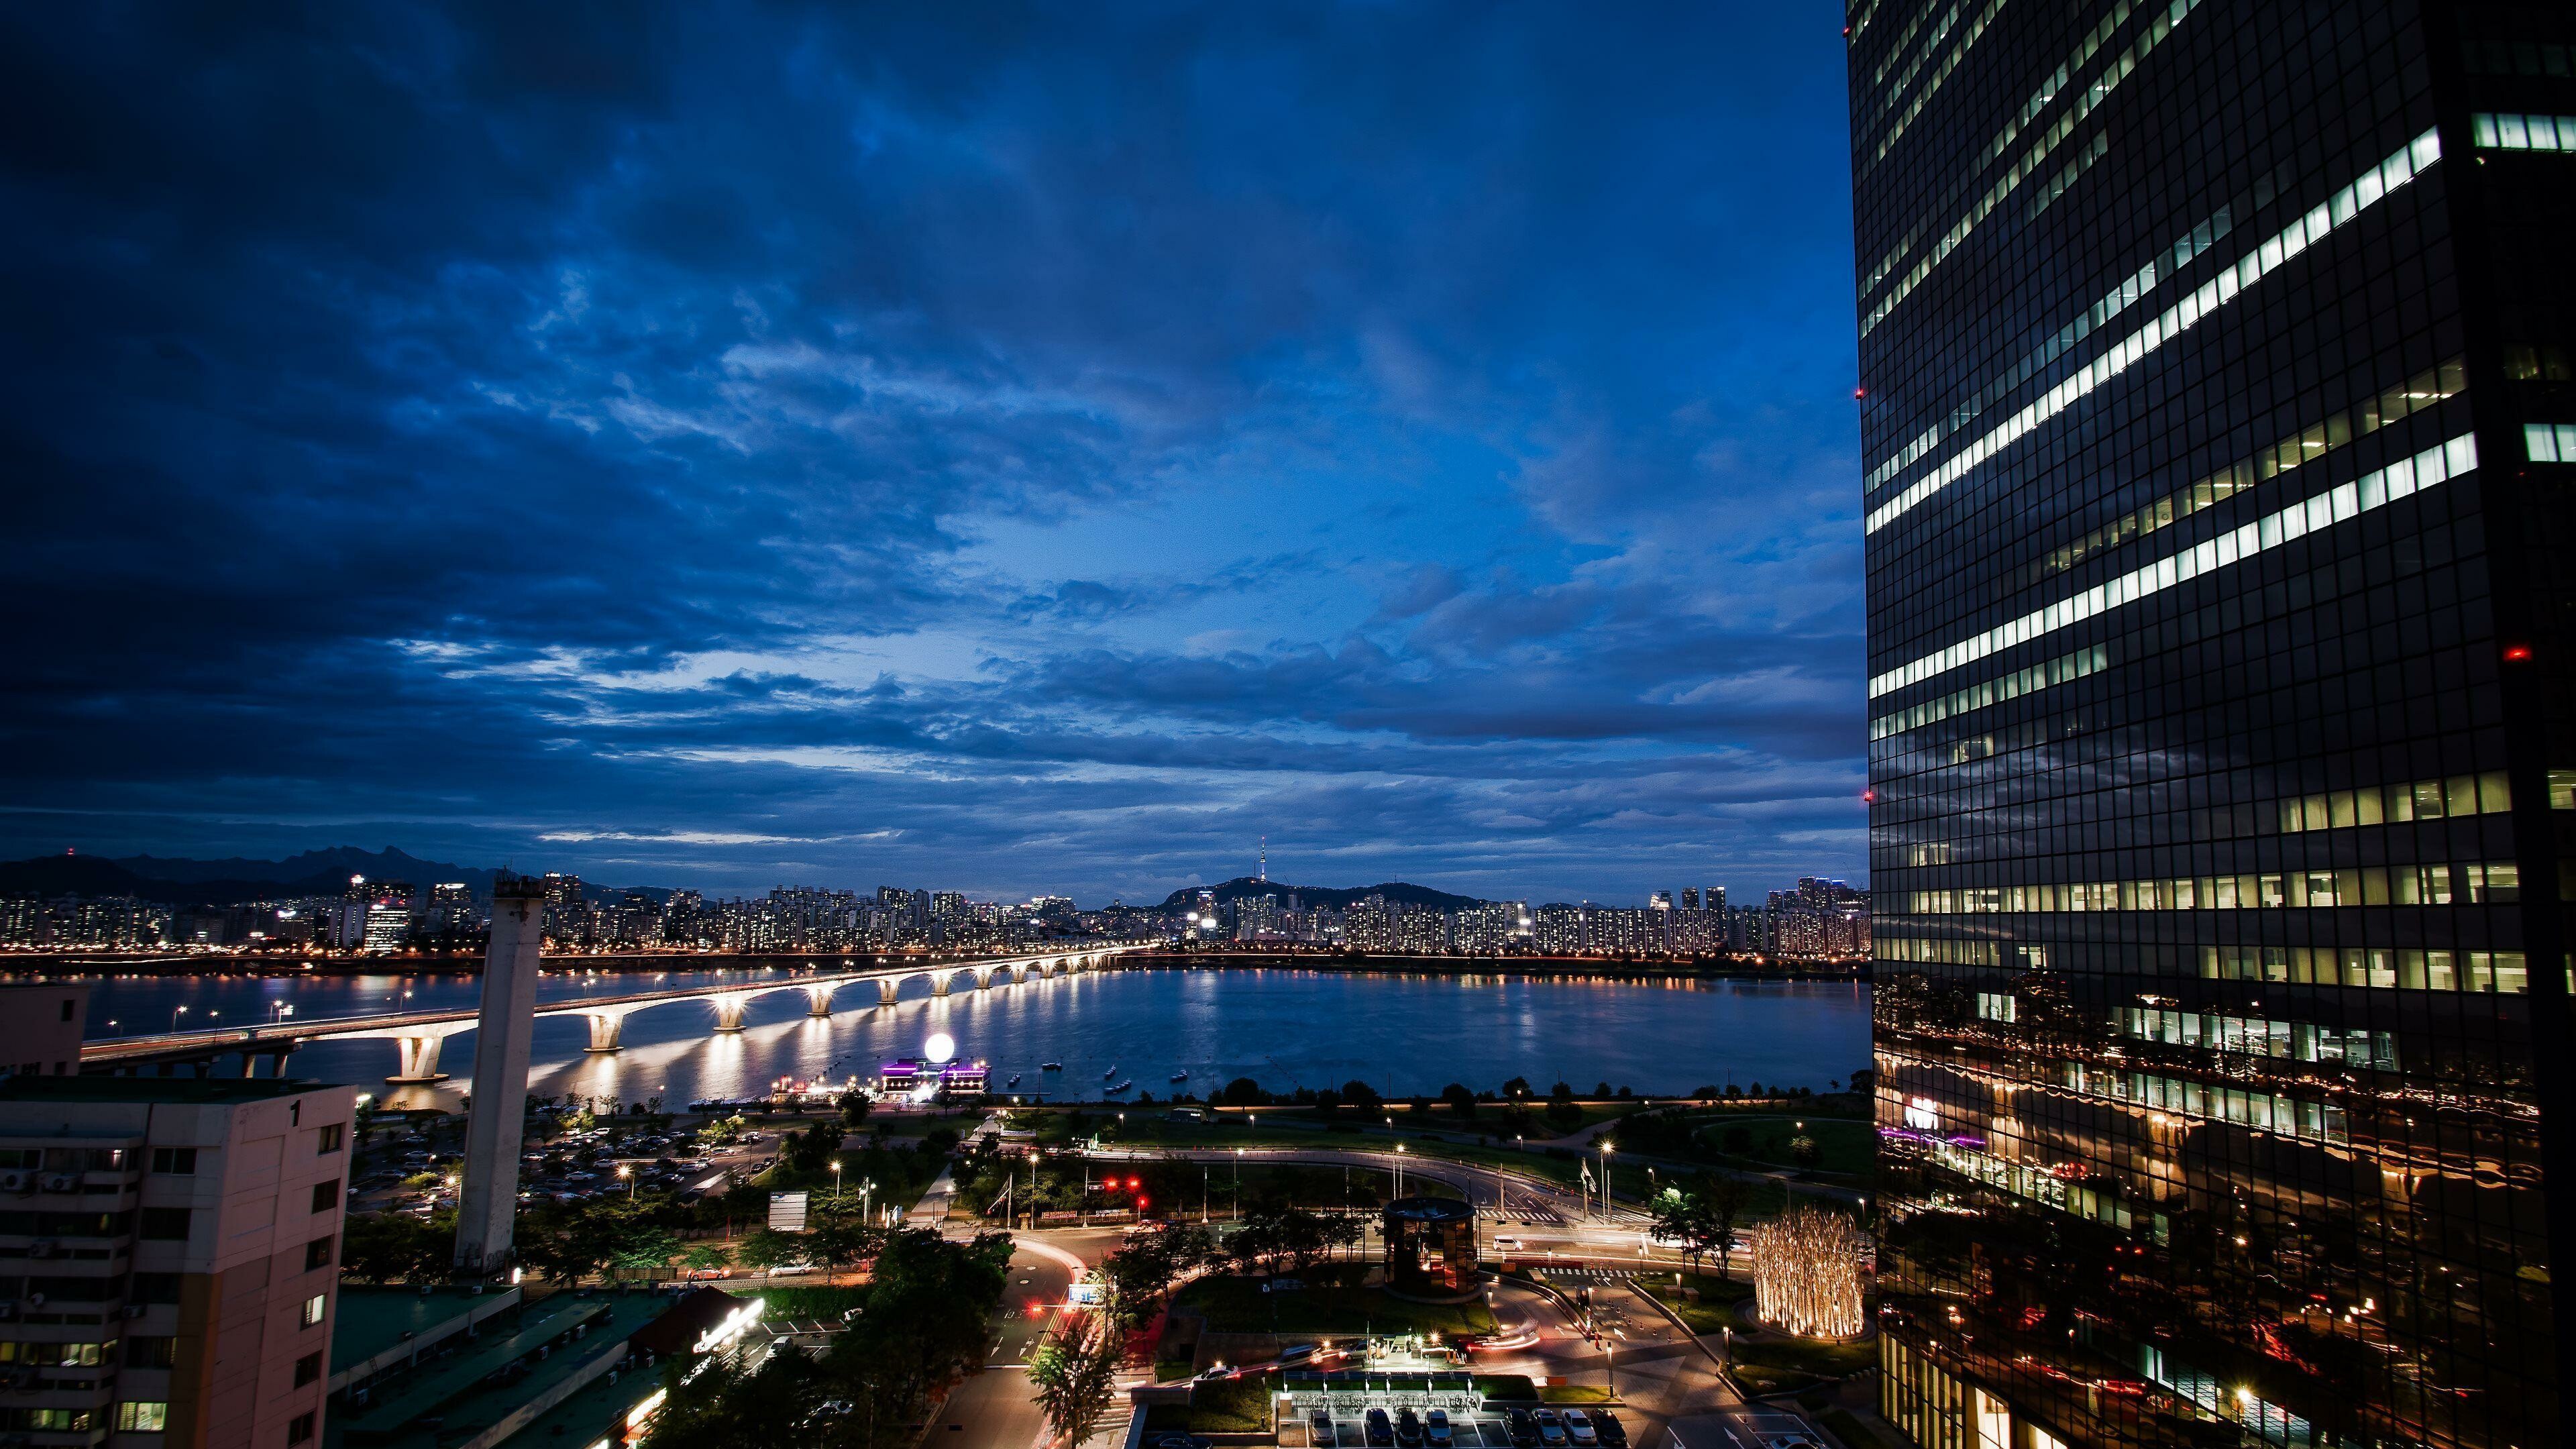 Korea: Seoul, Buildings, Waterfront, Night city lights. 3840x2160 4K Wallpaper.